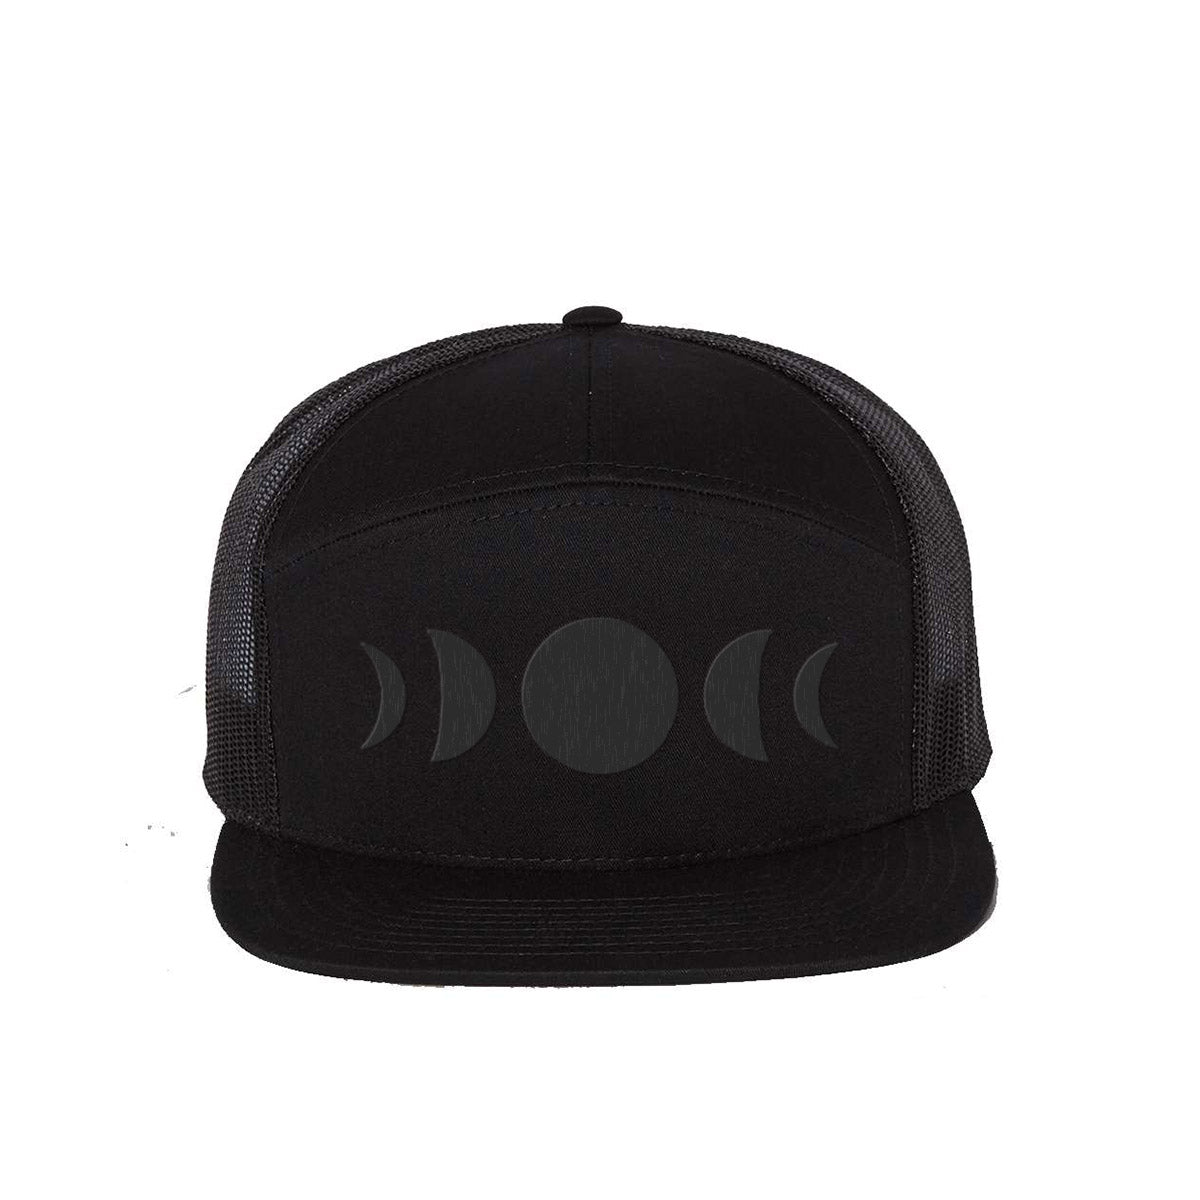 MOONS 7-panel trucker hat  -  Black